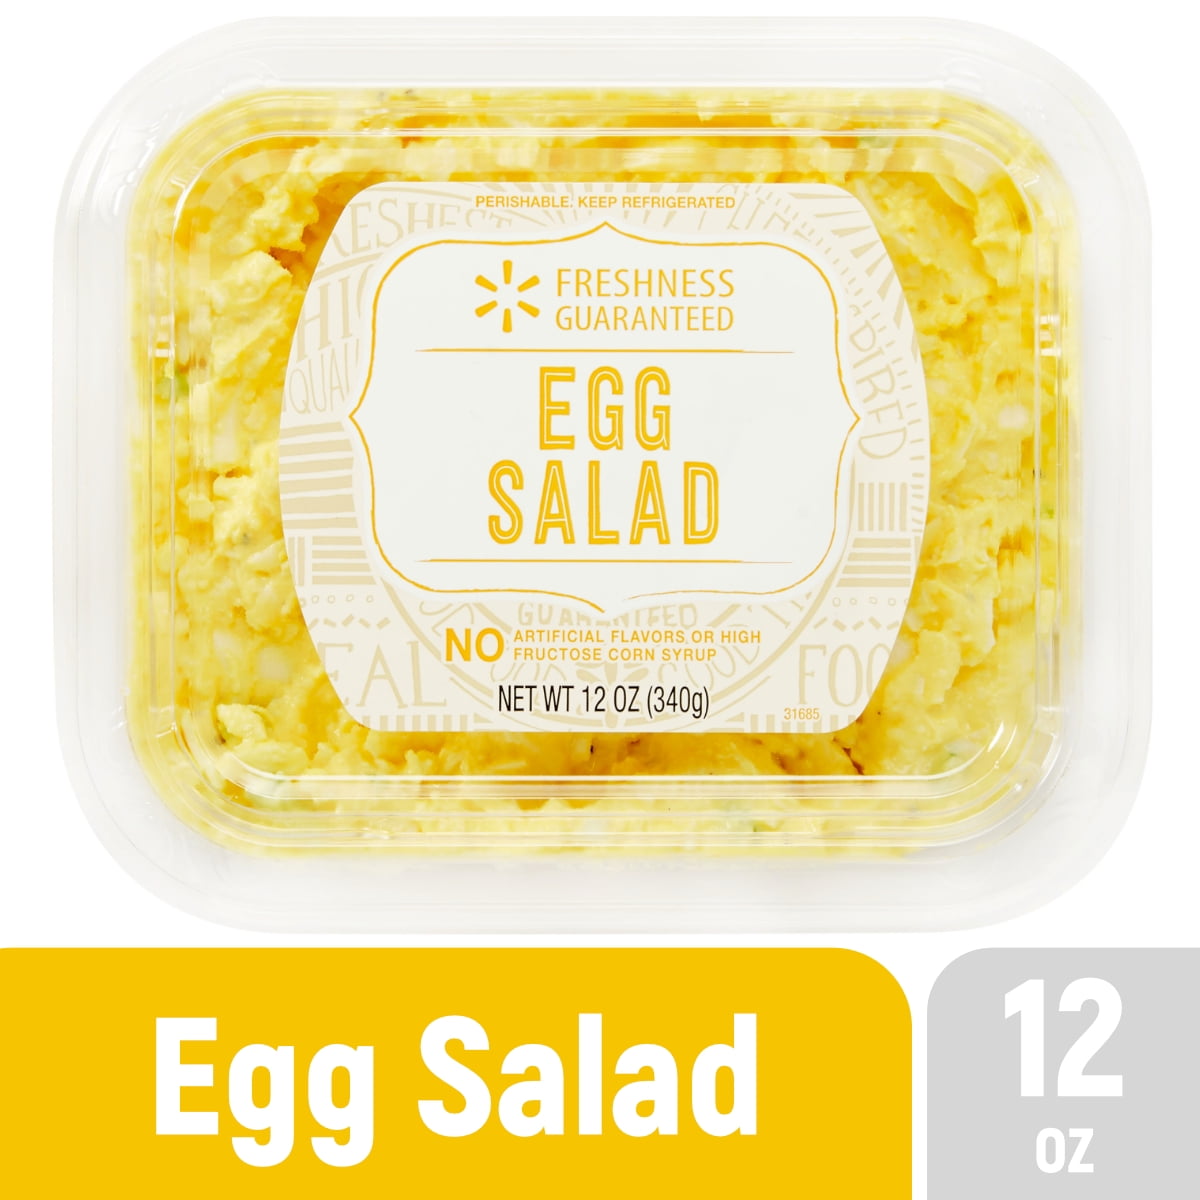 Freshness Guaranteed Premium Egg Salad, Ready to Serve, 12 oz